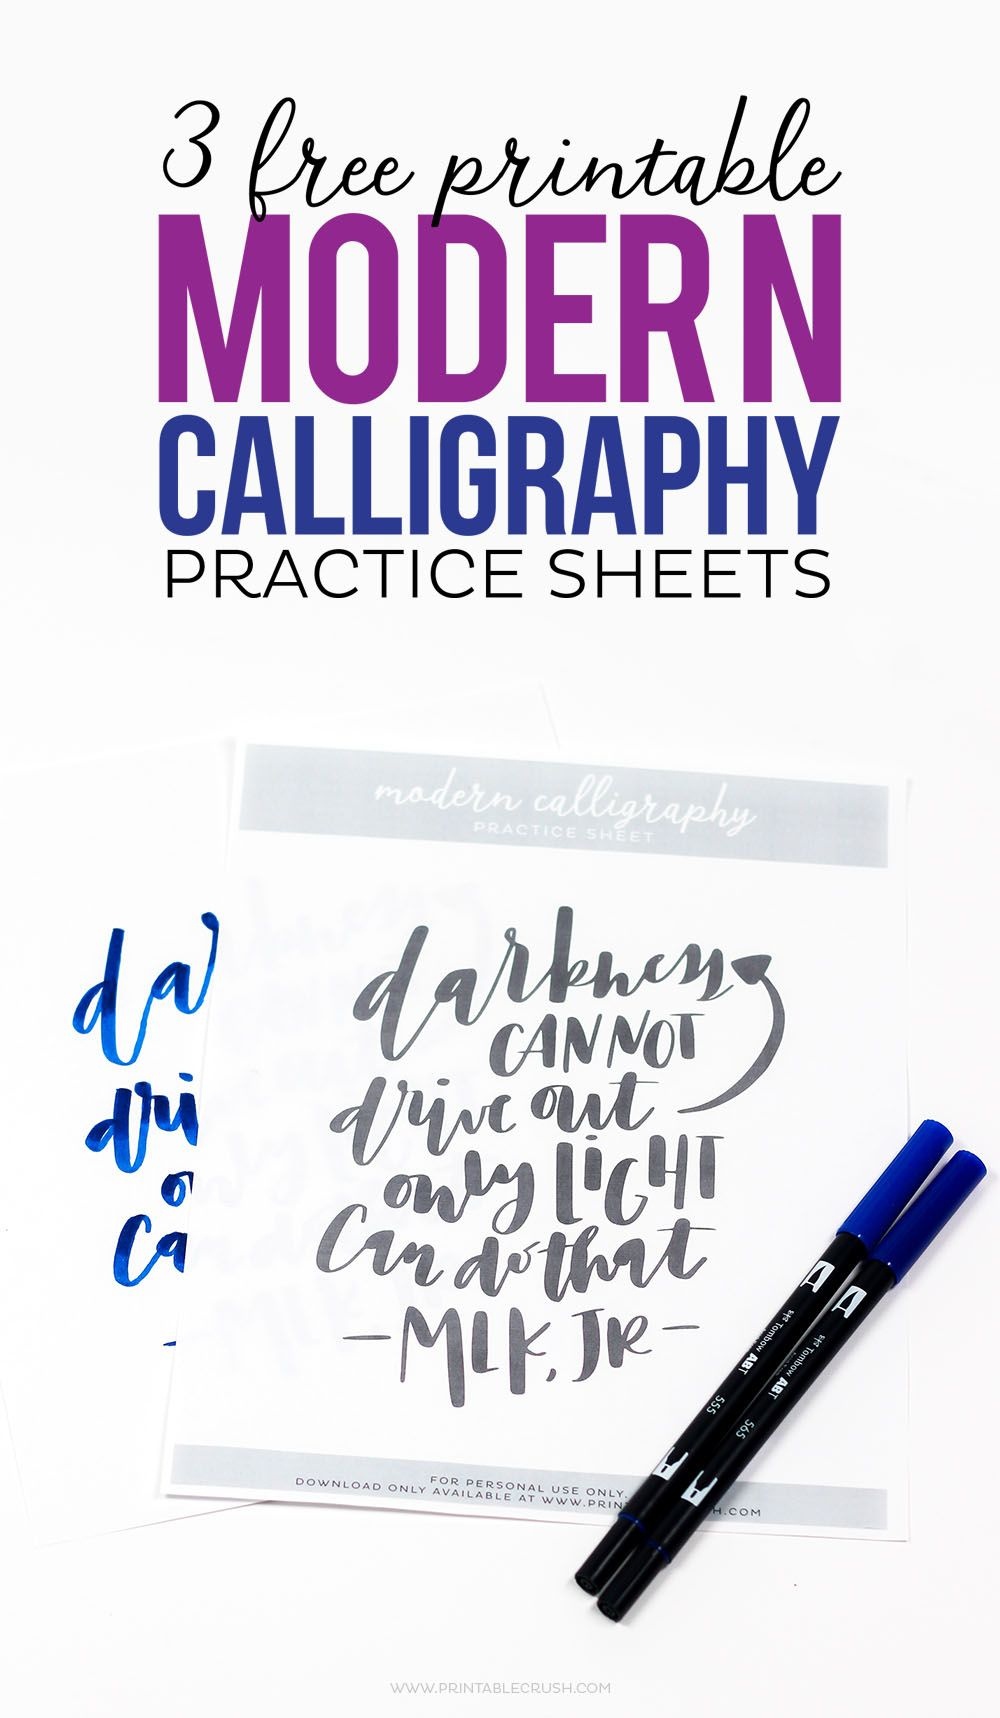 3 Free Printable Modern Calligraphy Practice Sheets (Printable Crush - Modern Calligraphy Practice Sheets Printable Free